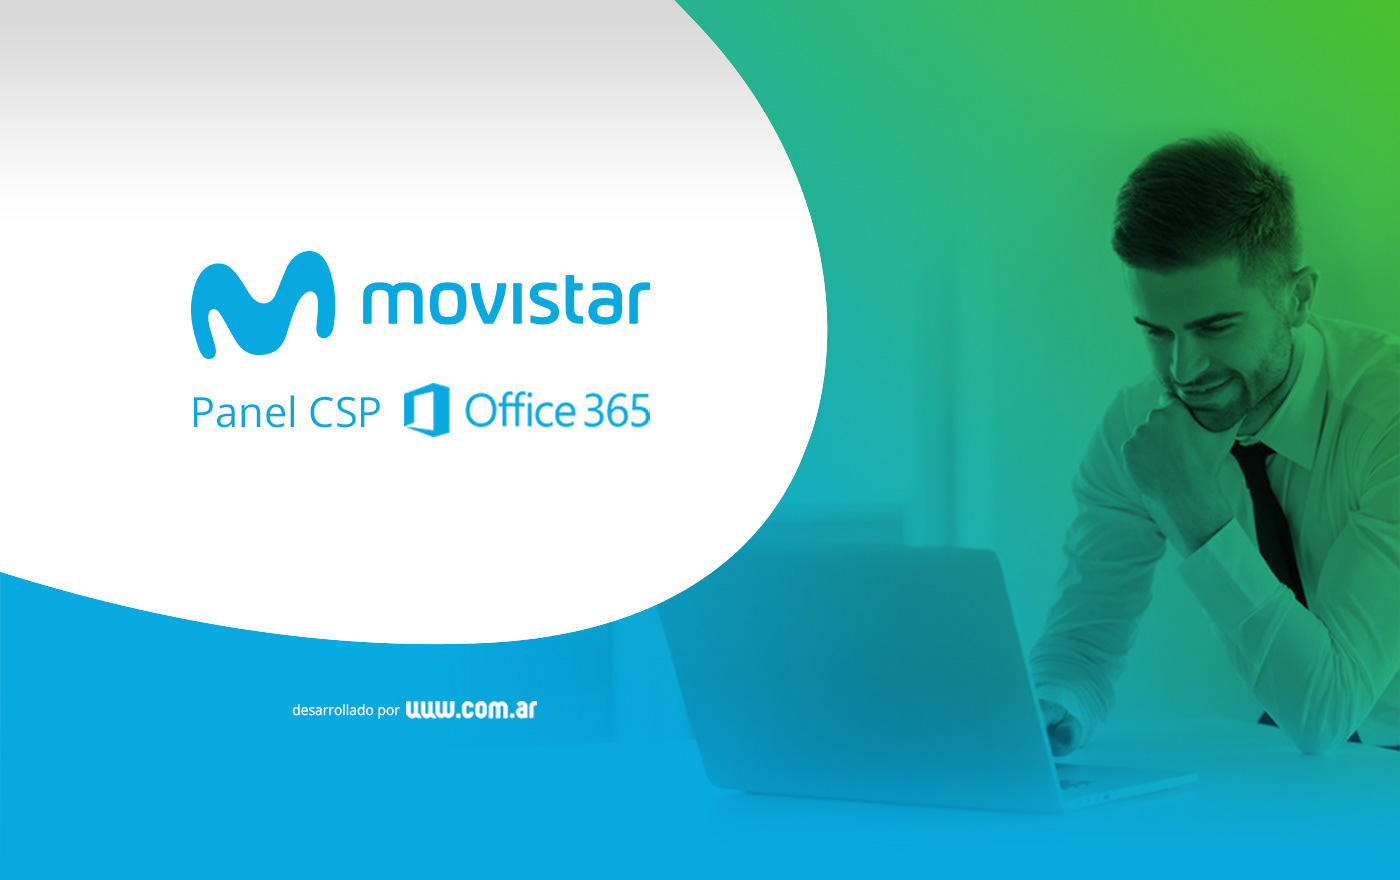 movistar office 365 Panel CSP CSP www.com.ar